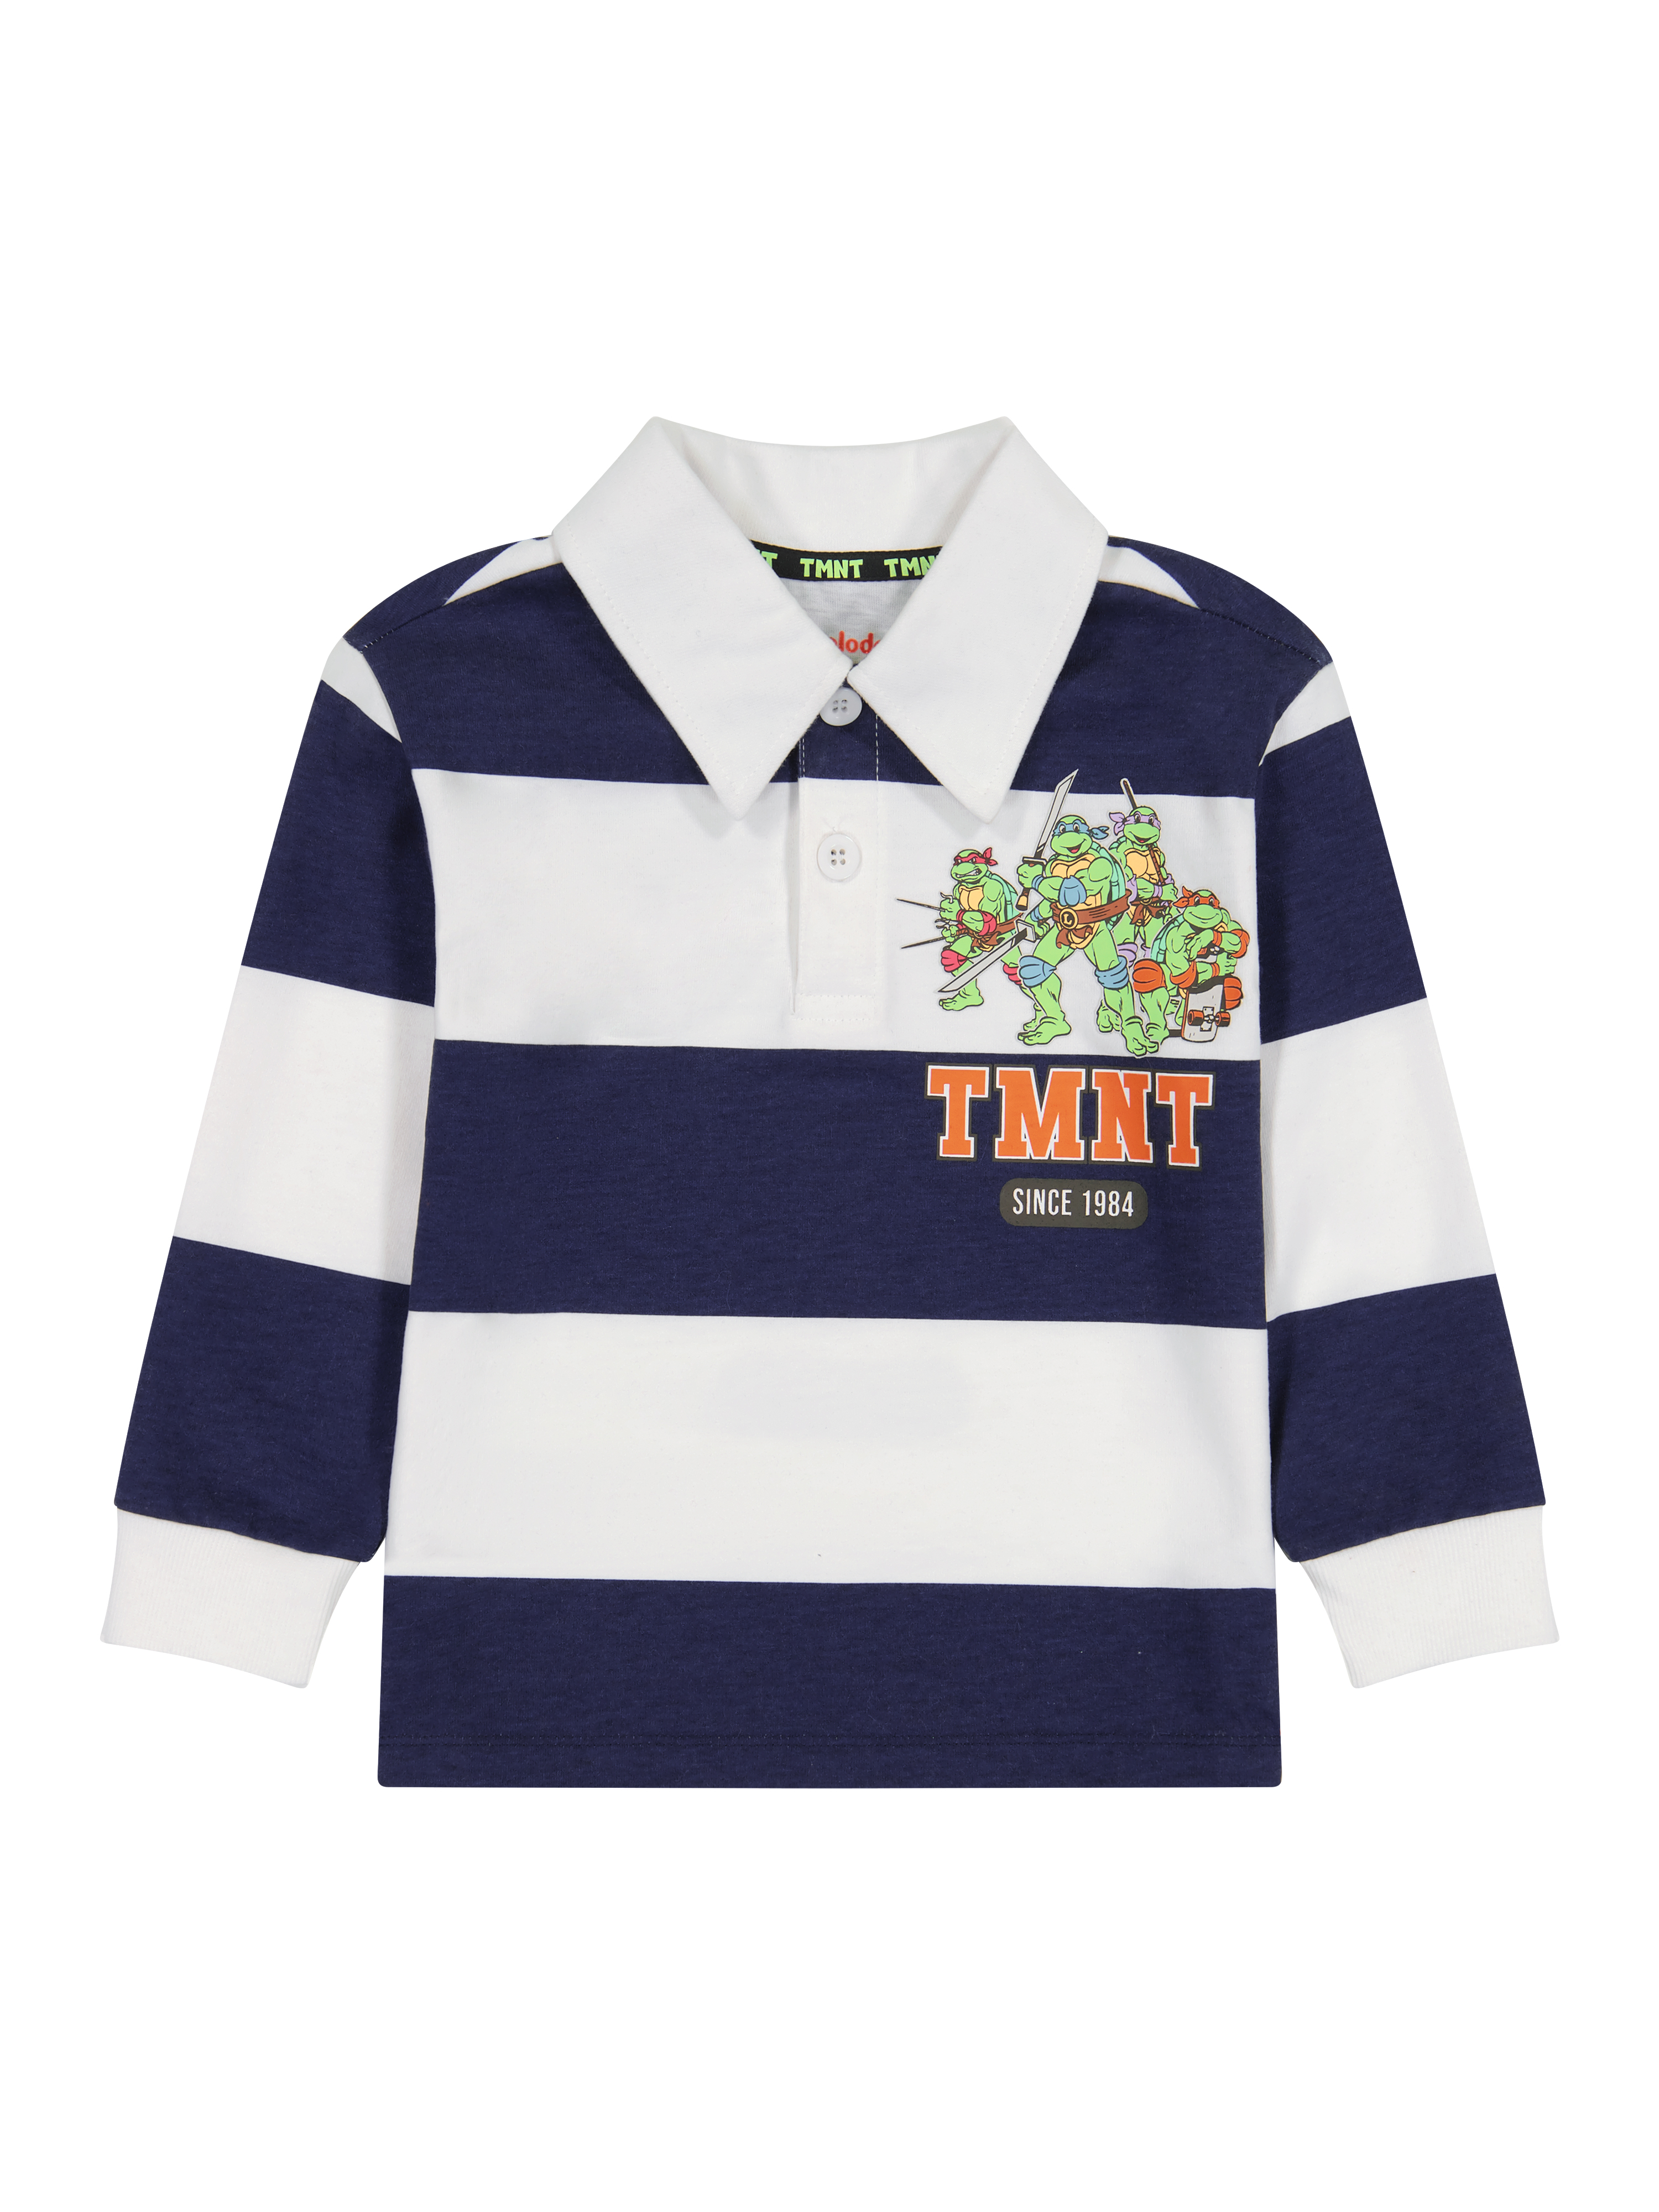 Nickelodeon Teenage Mutant Ninja Turtles Toddler Boy Long Sleeve Rugby Polo Shirt, Sizes 2T-5T - image 3 of 5